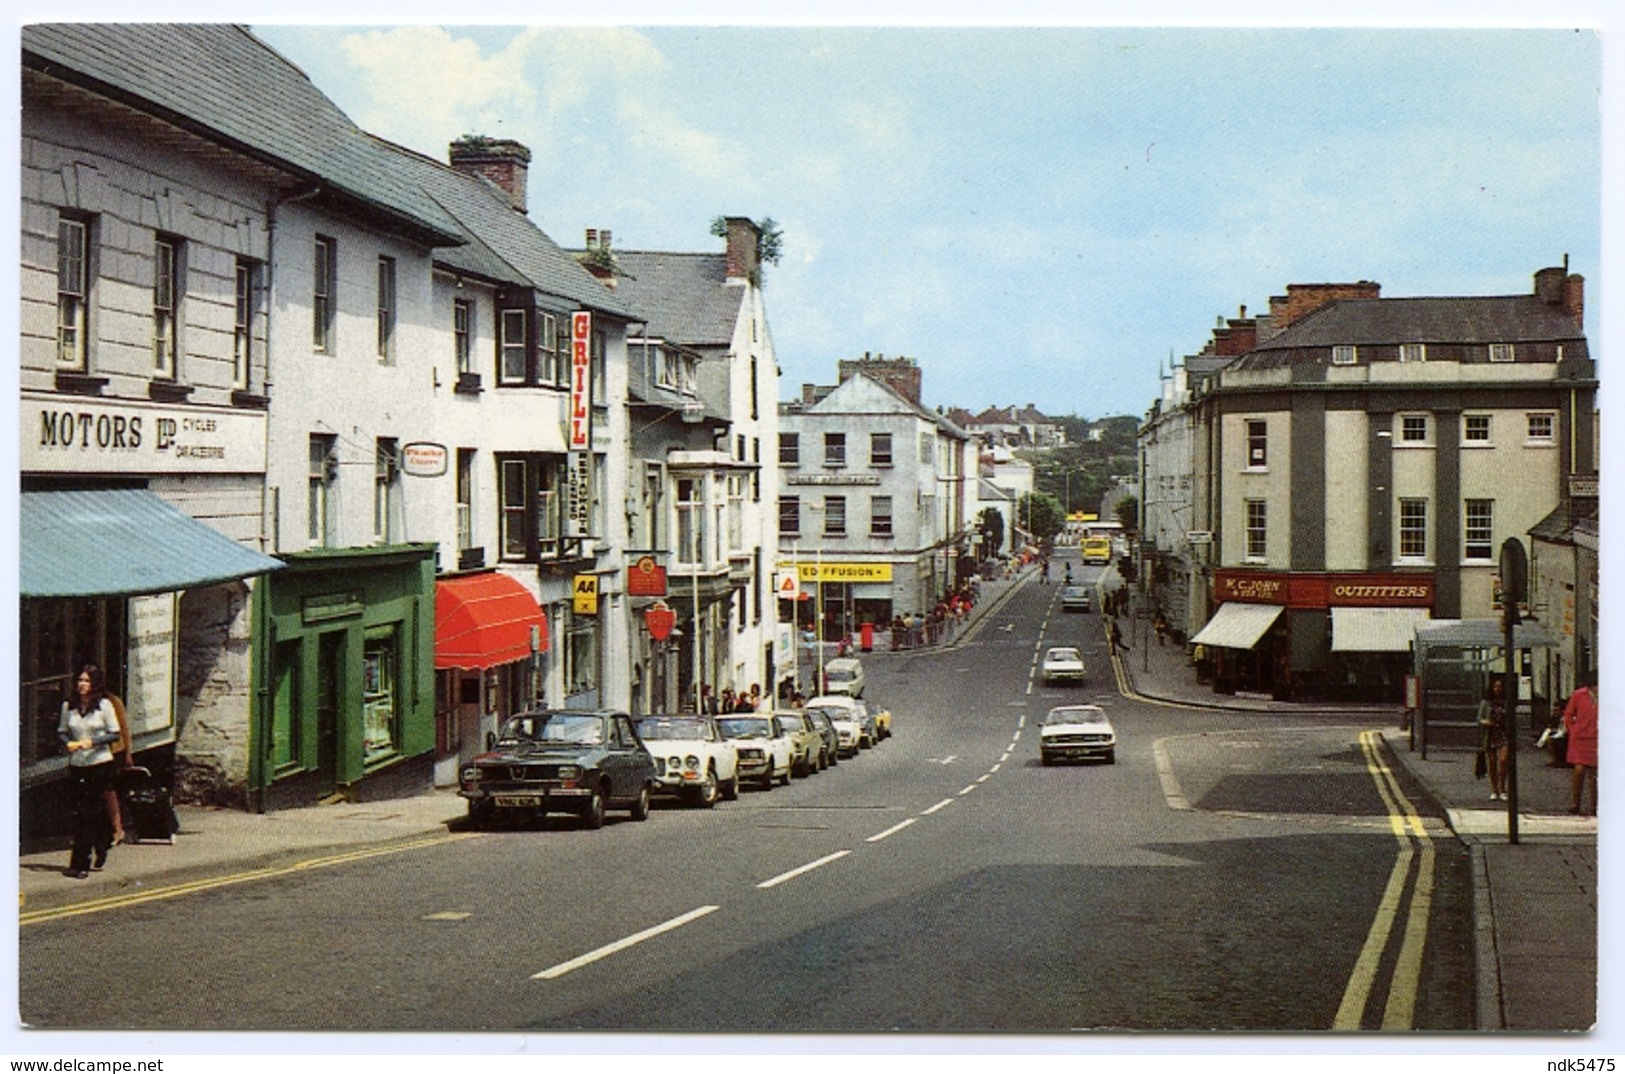 HAVERFORDWEST : HIGH STREET - Pembrokeshire